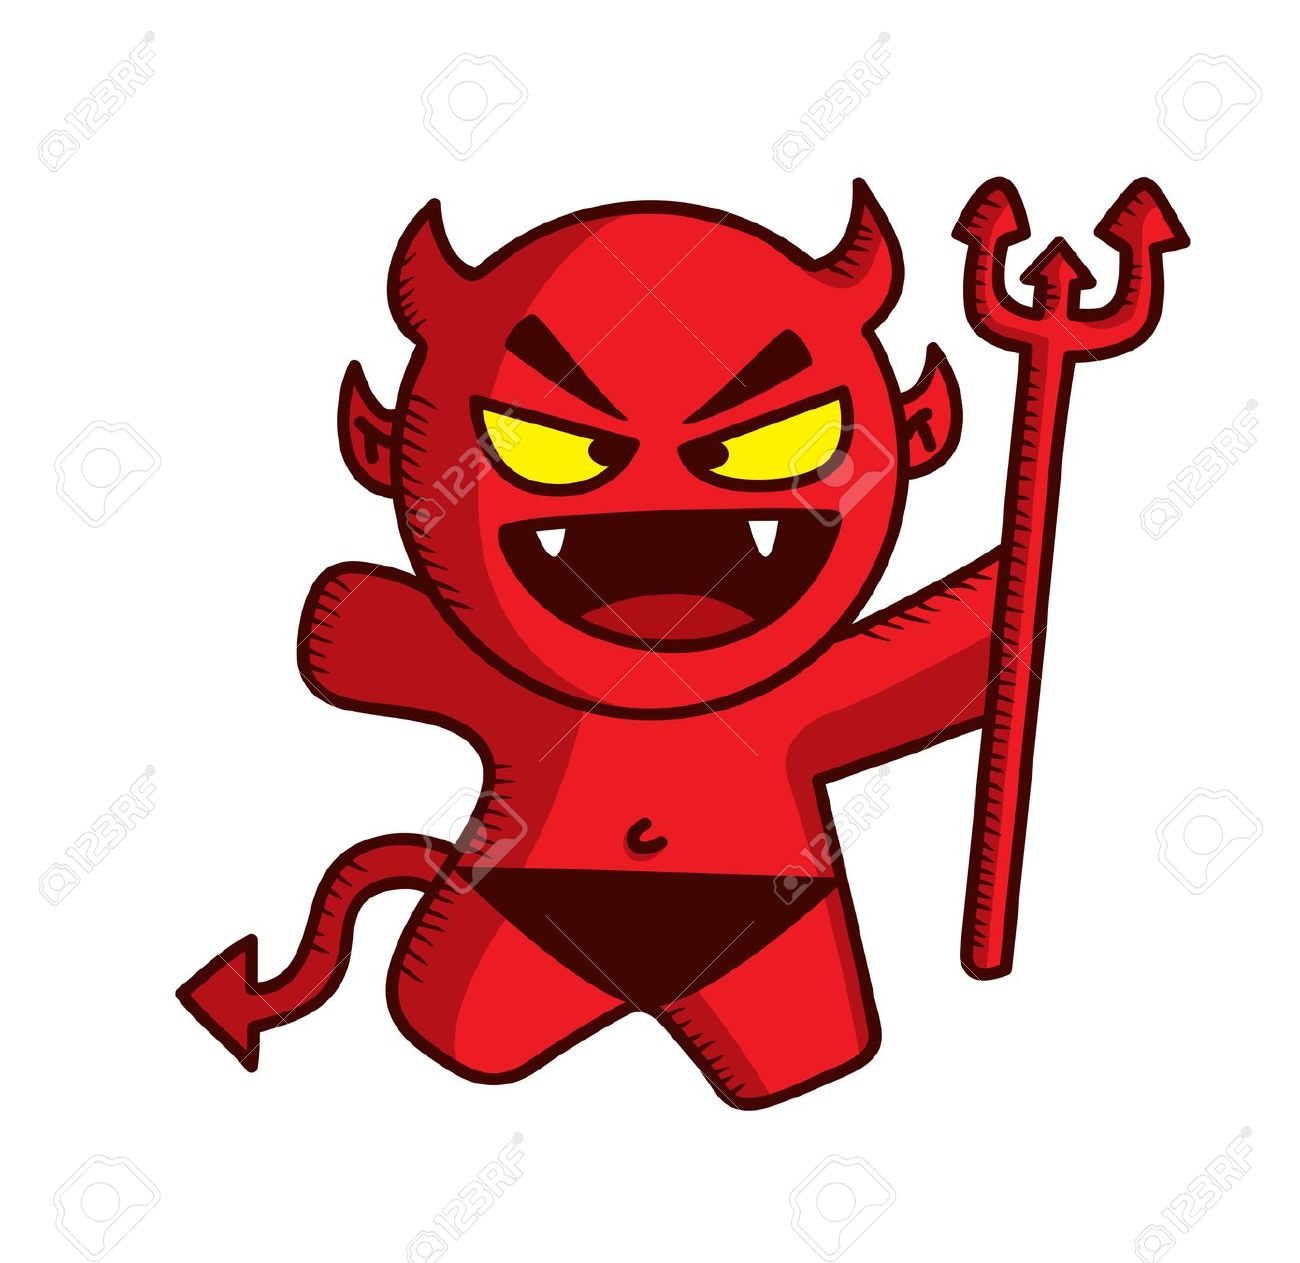 Cute Devil PNG HD - 128338